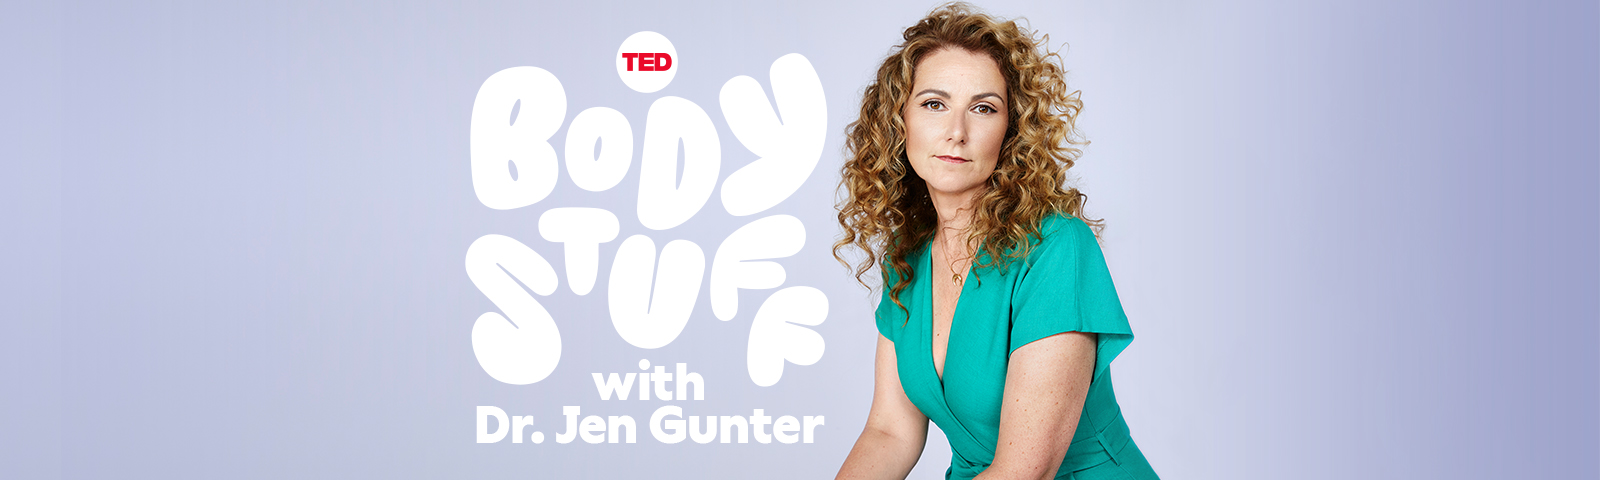 Body Stuff with Dr. Jen Gunter